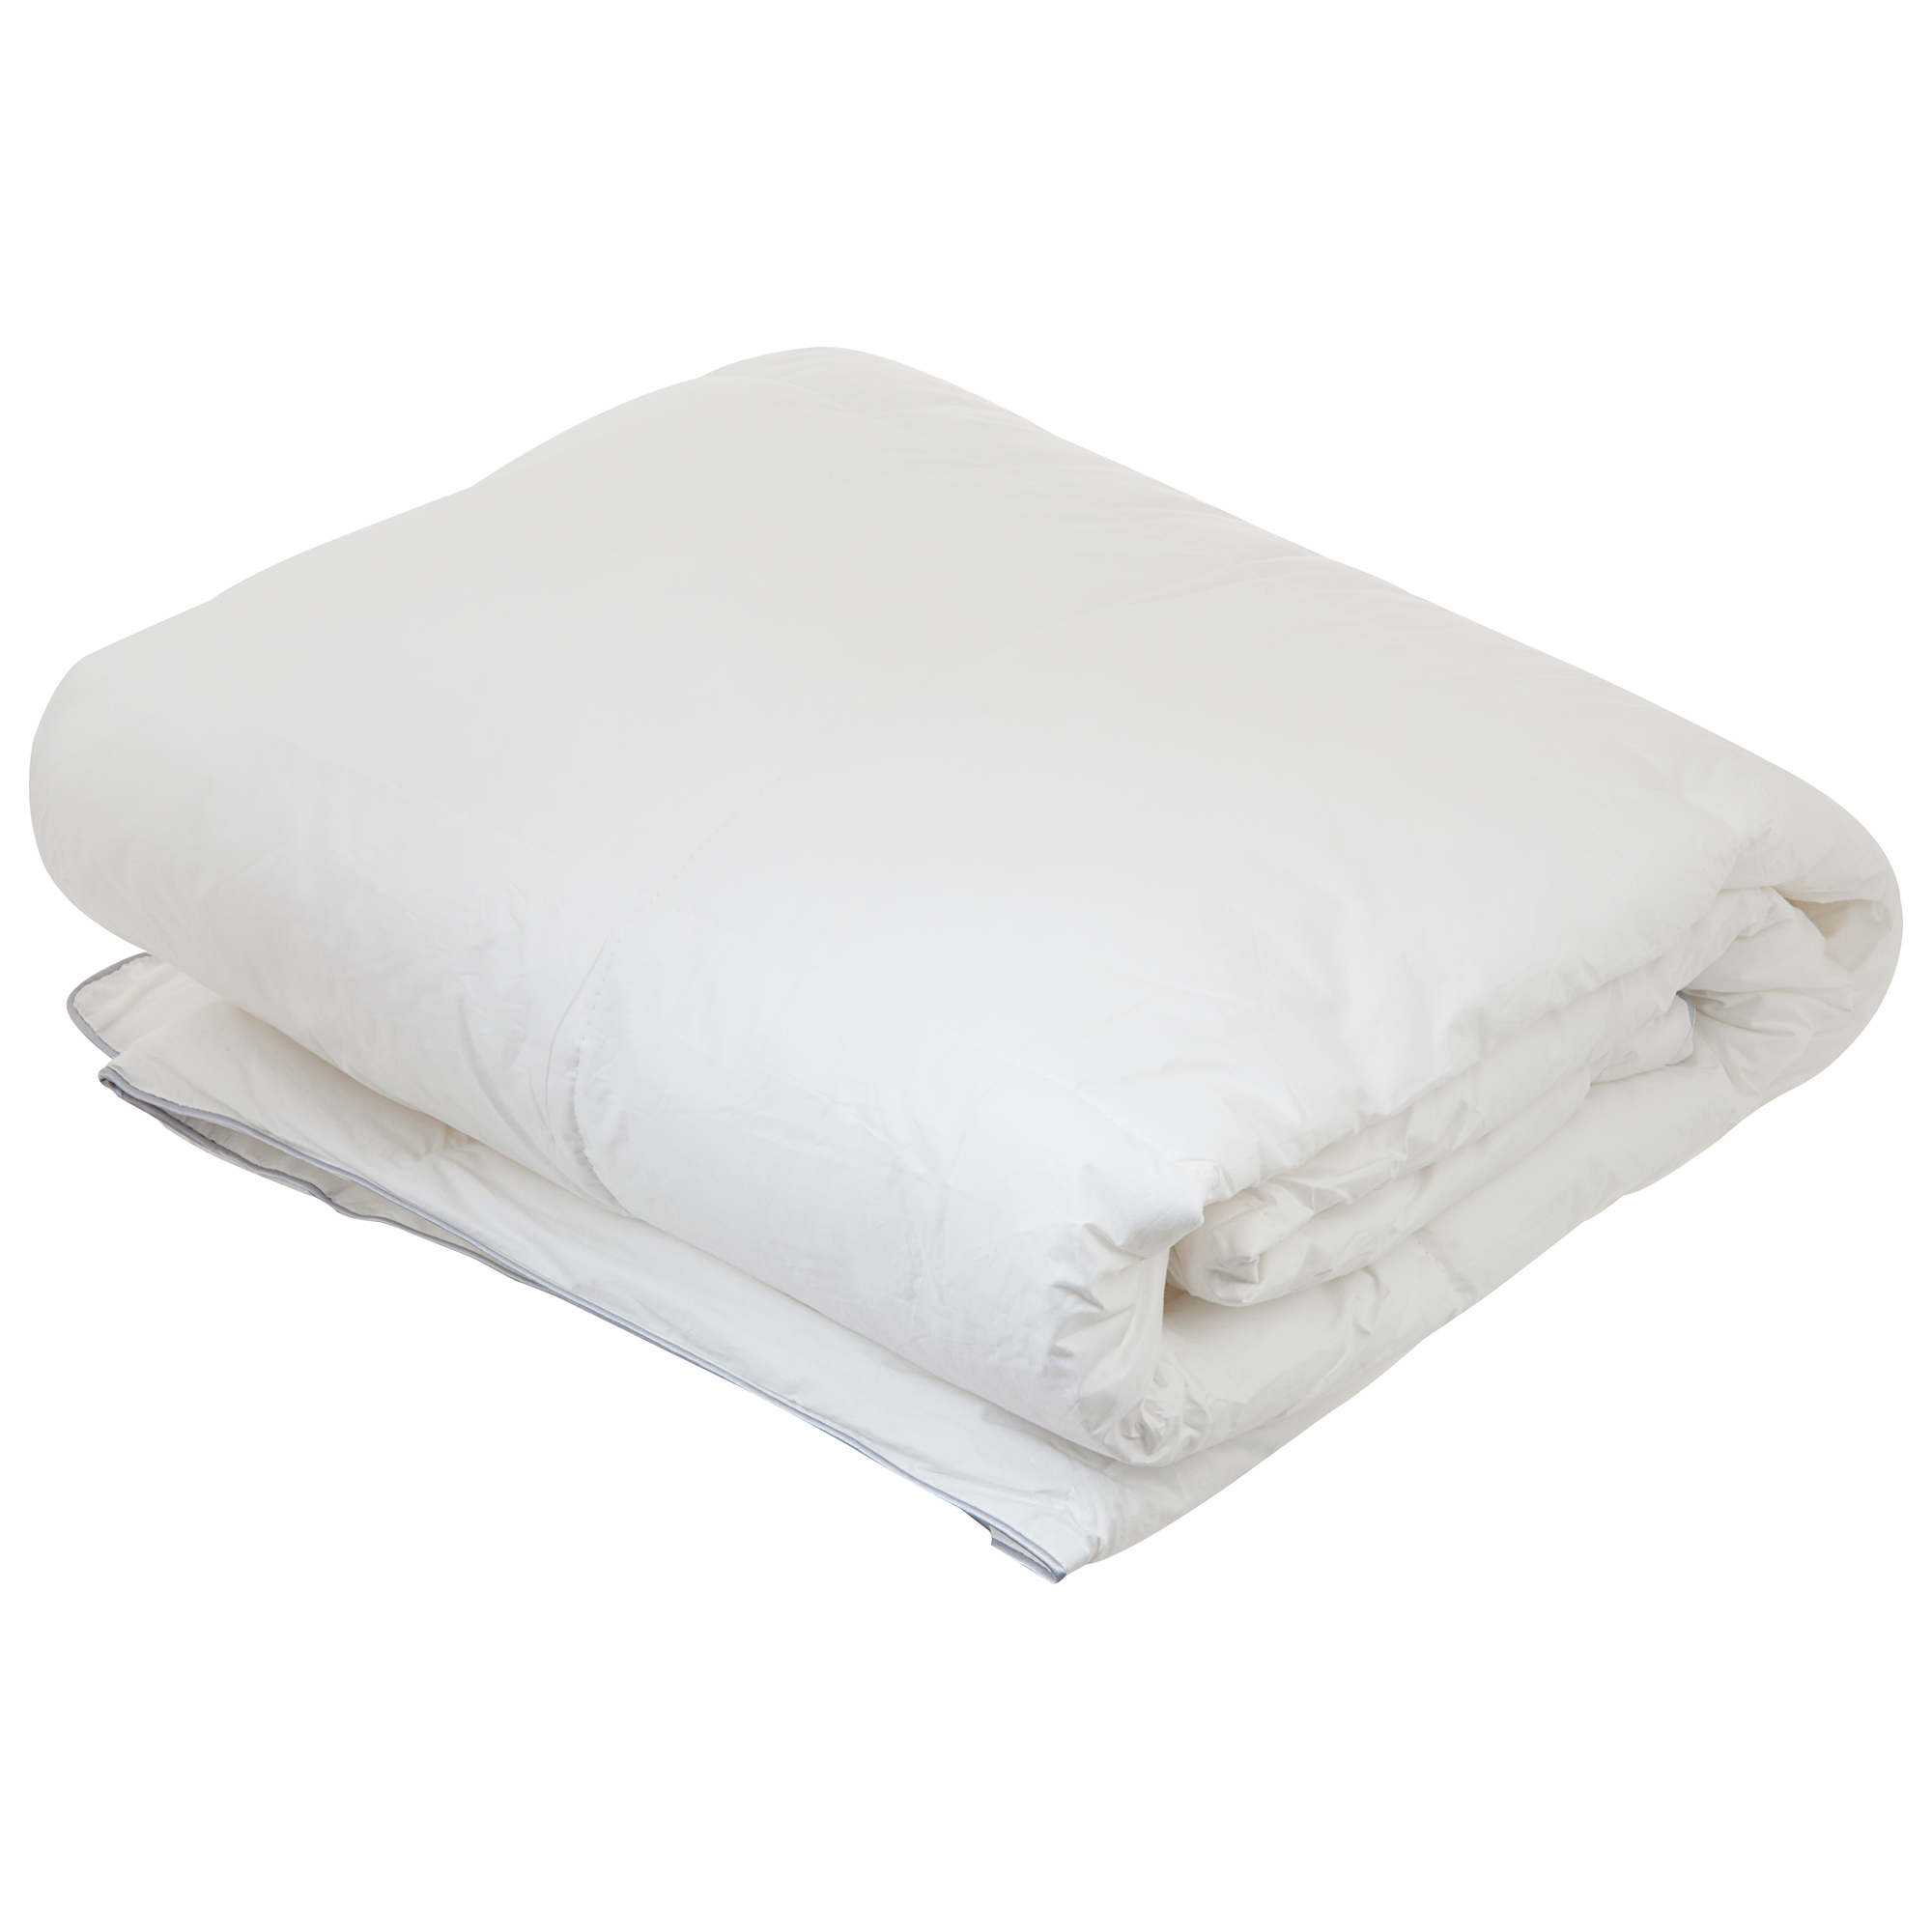 Одеяло с синтетическим trevera Wonne Traum 150х210, цвет белый, размер 150х210 см - фото 1